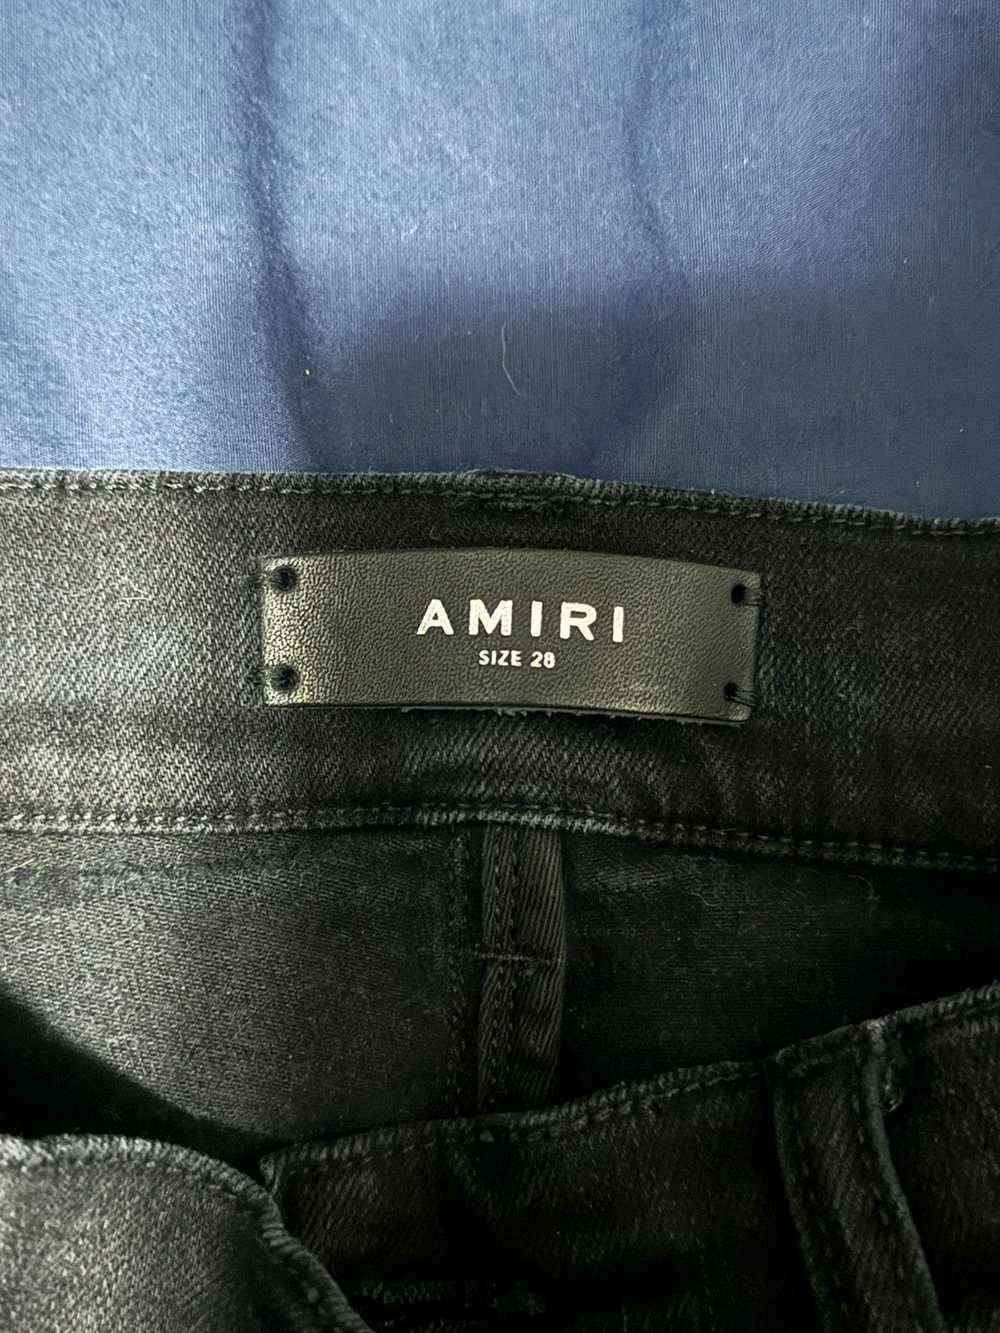 Amiri Amiri Black Hibiscus Stencel Jeans - image 3